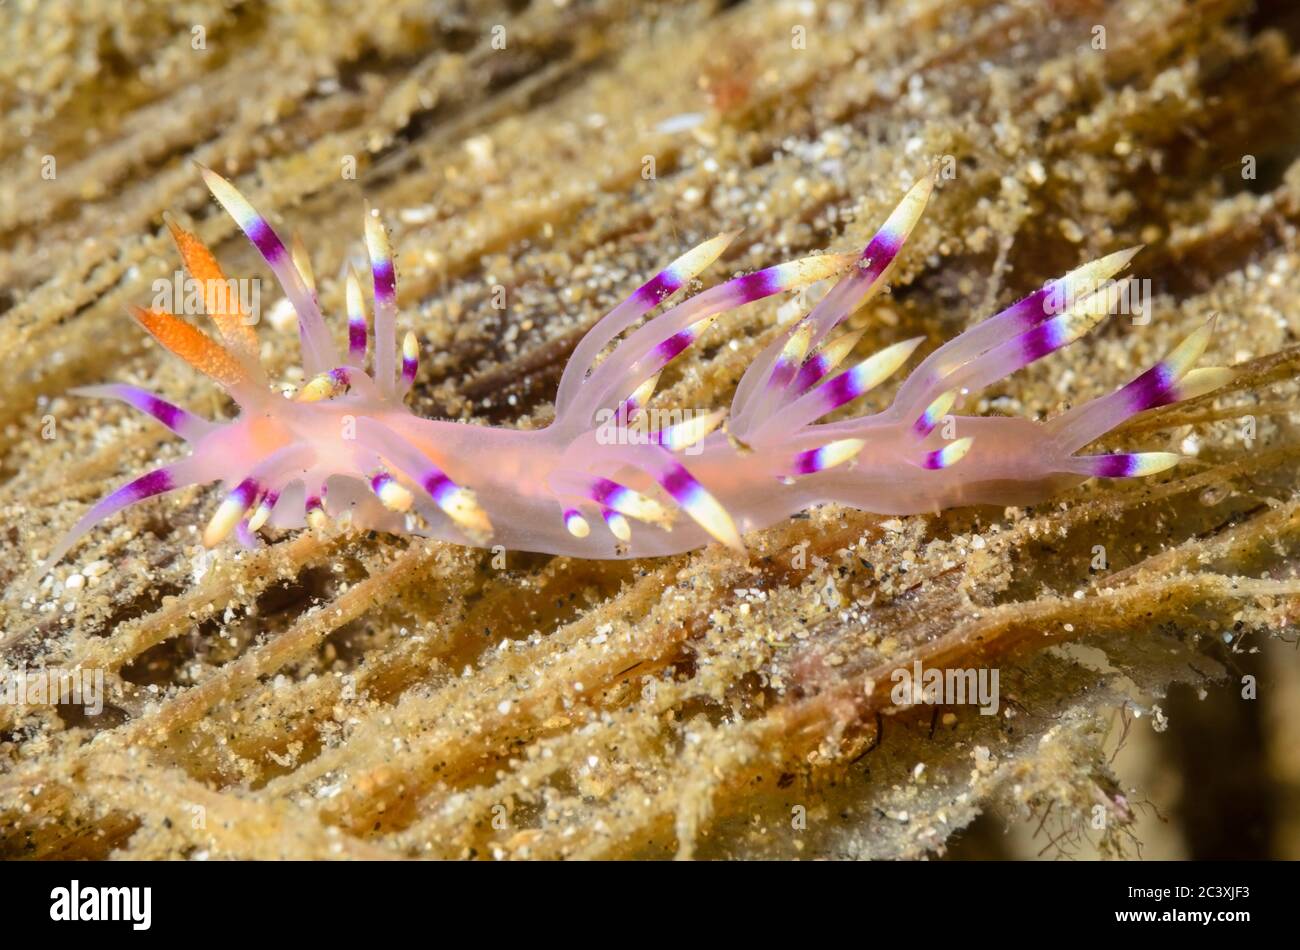 sea slug or nudibranch, Coryphellina exoptata, Lembeh Strait, North Sulawesi, Indonesia, Pacific Stock Photo